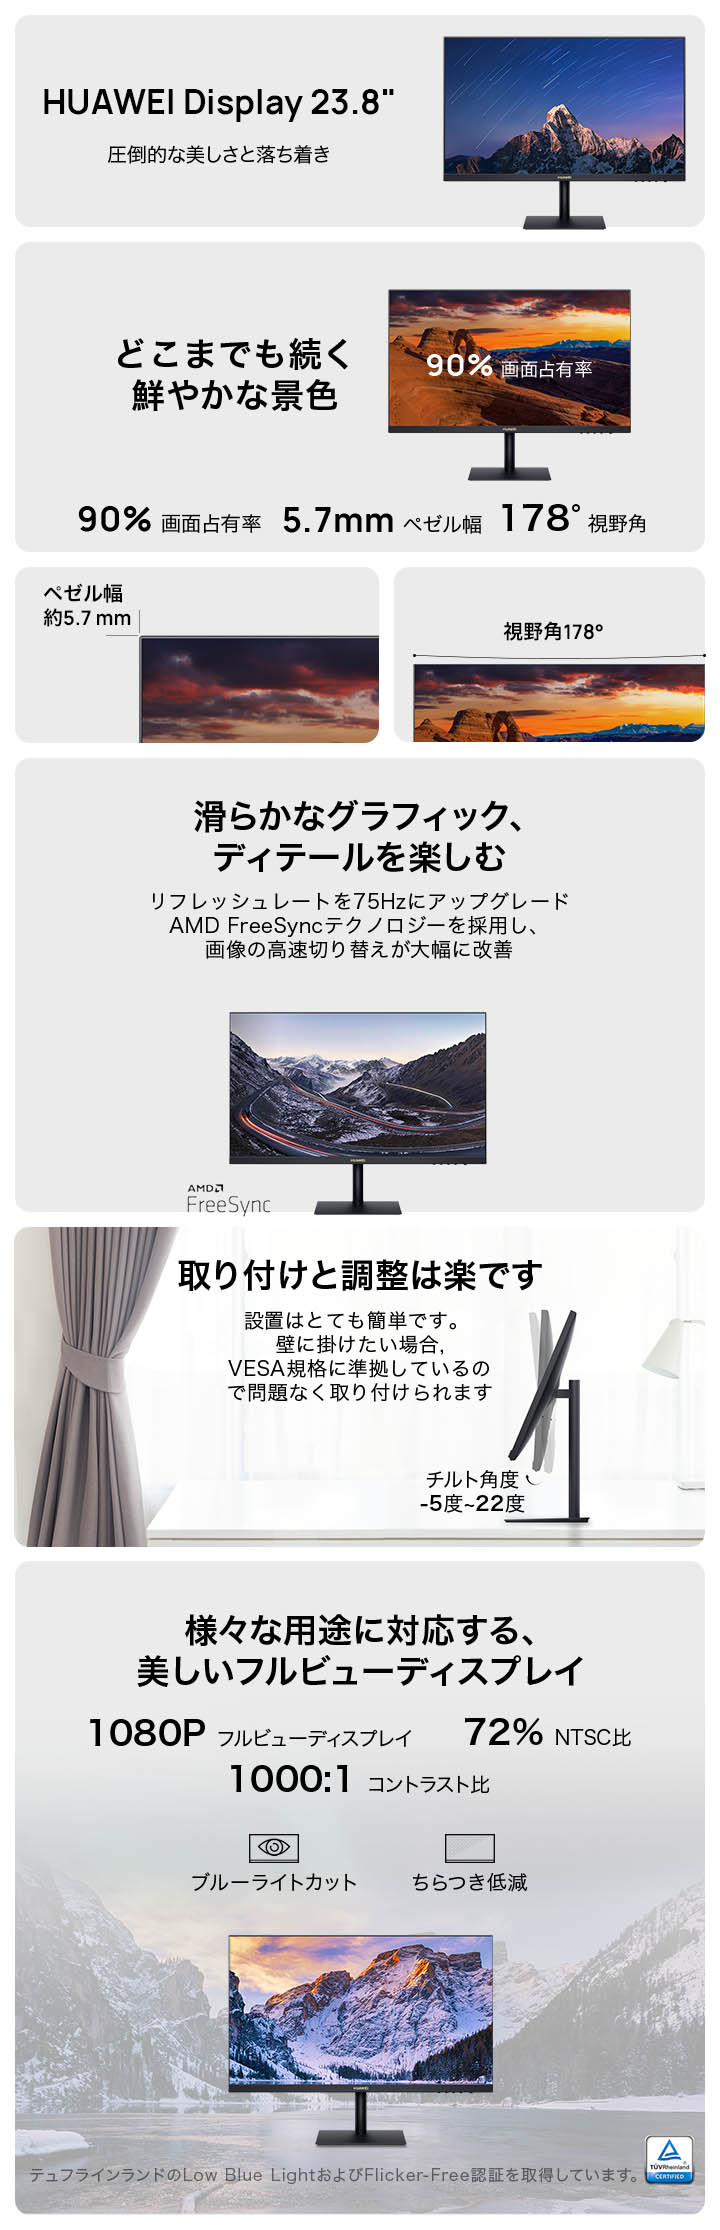 HUAWEI Display 23.8インチを購入-HUAWEI JP